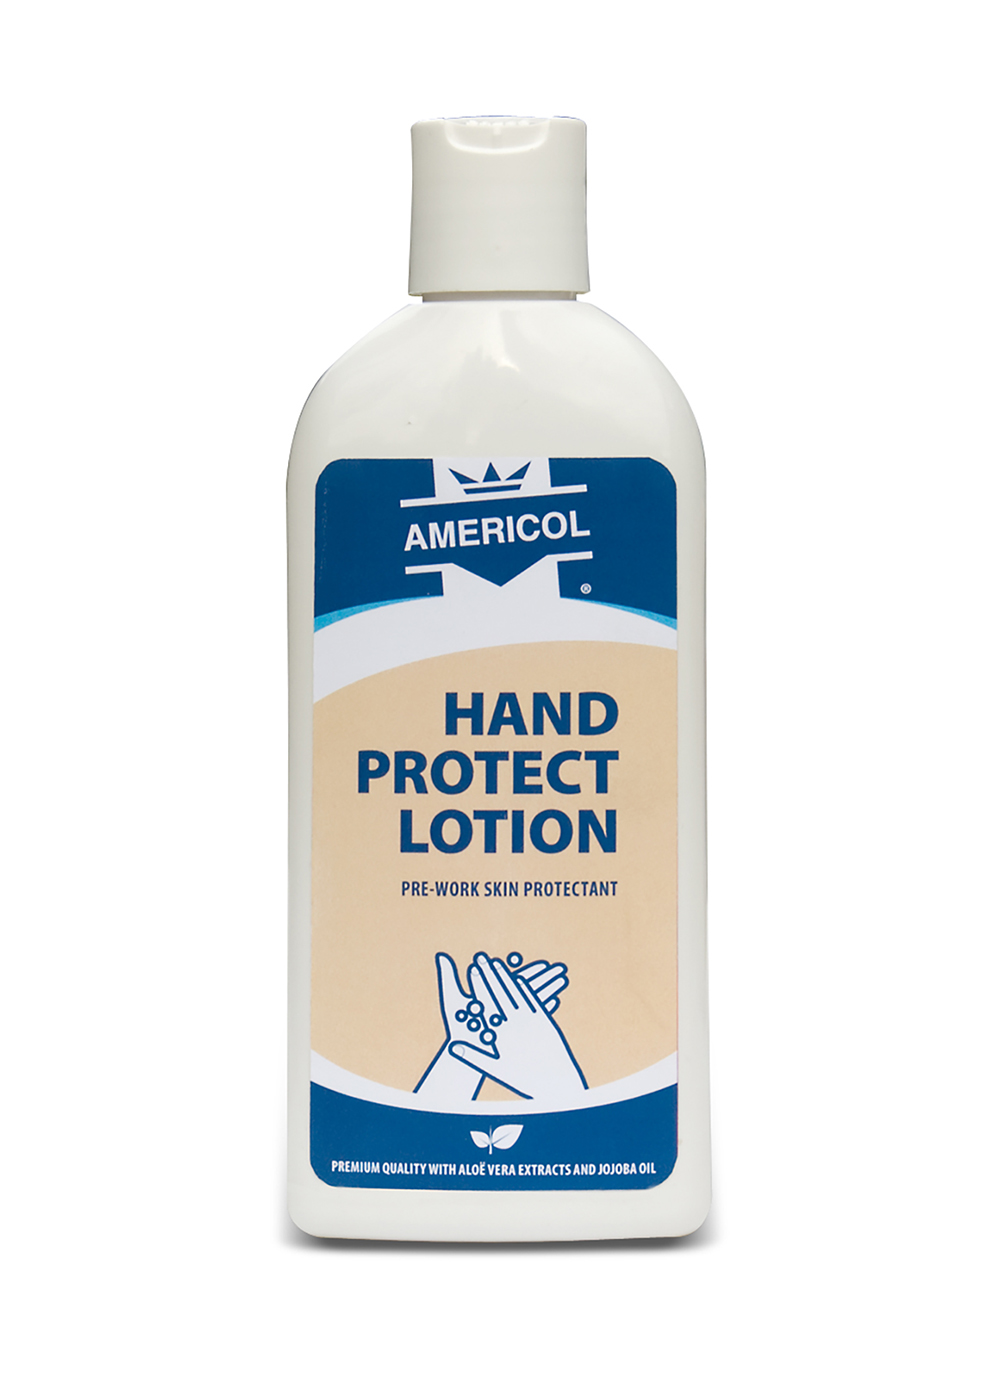 AMERICOL hand protect lotion